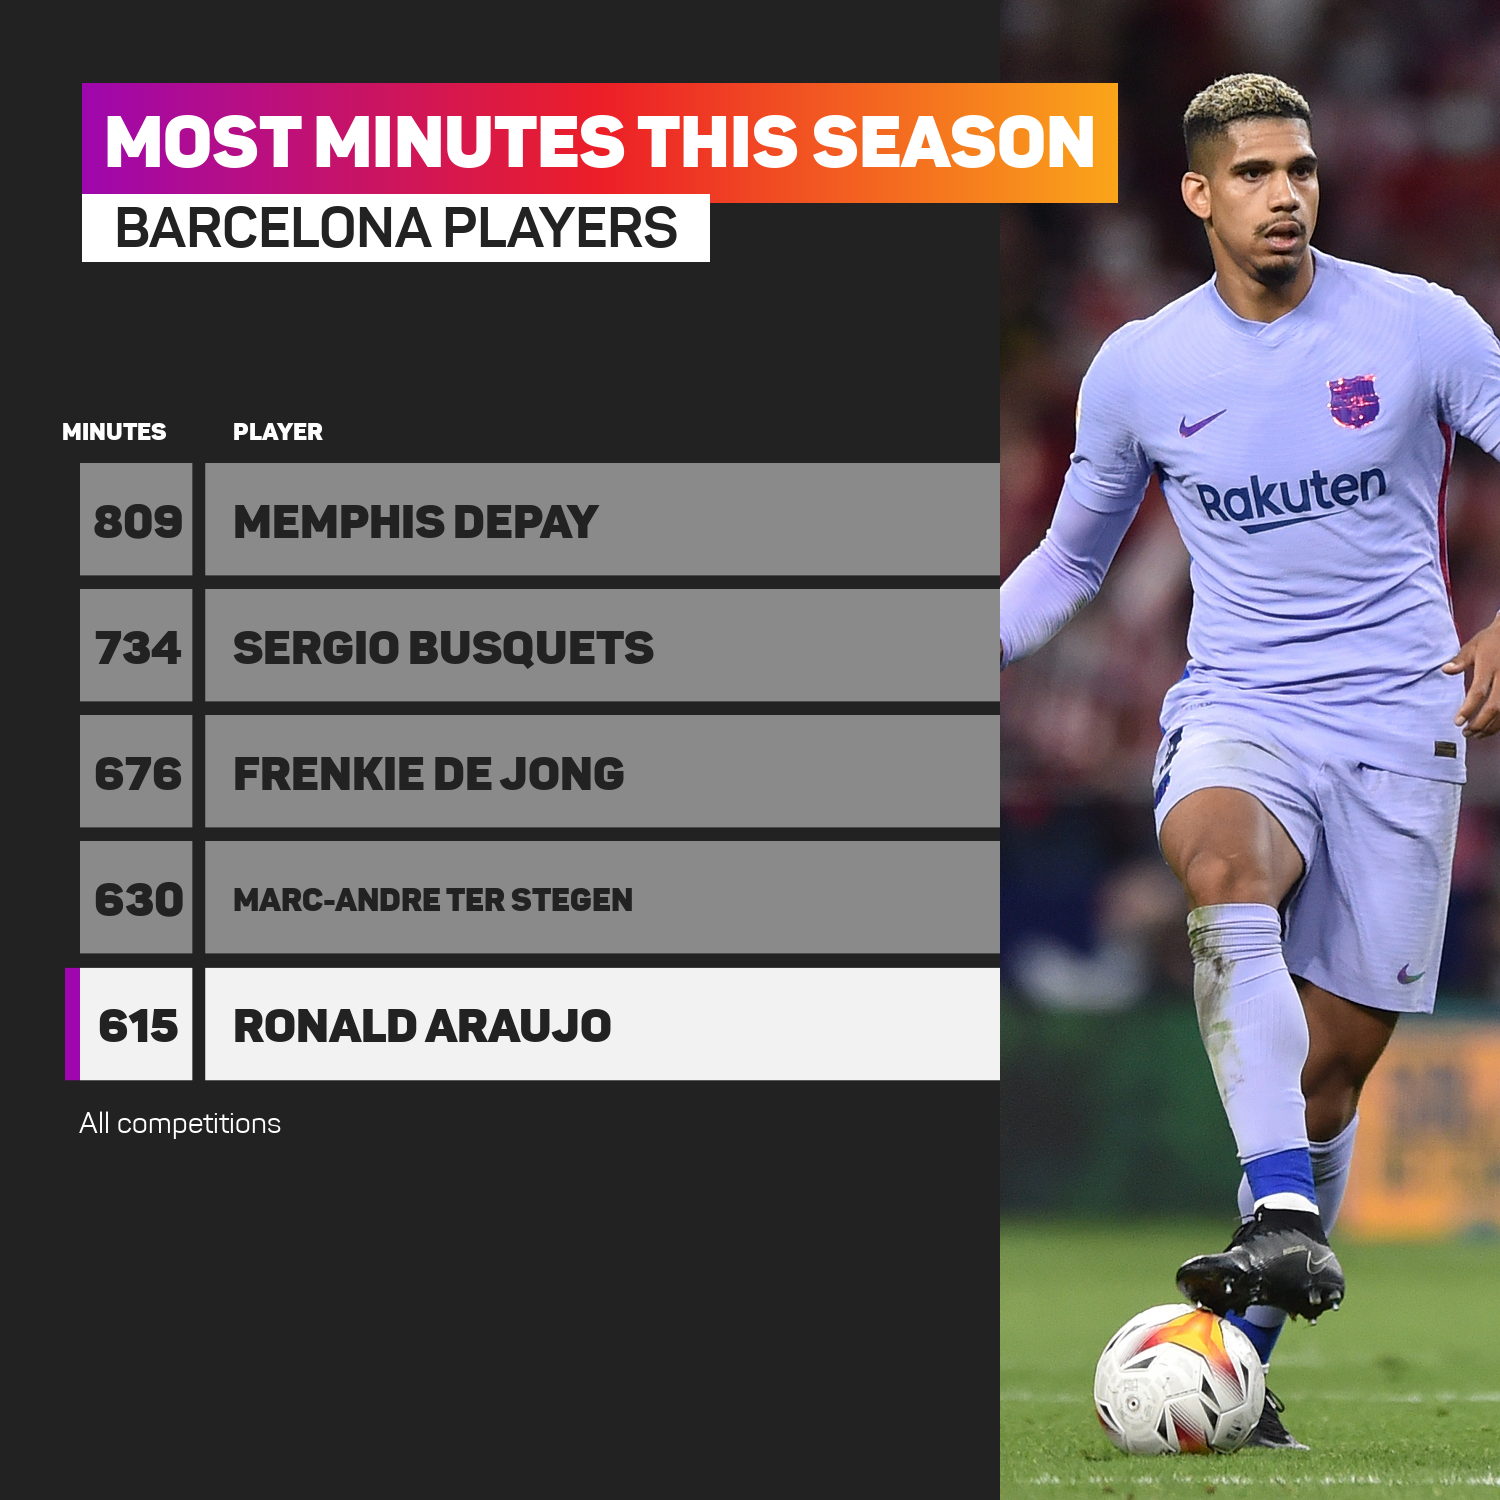 Ronald Araujo has played 615 minutes for Barcelona this season